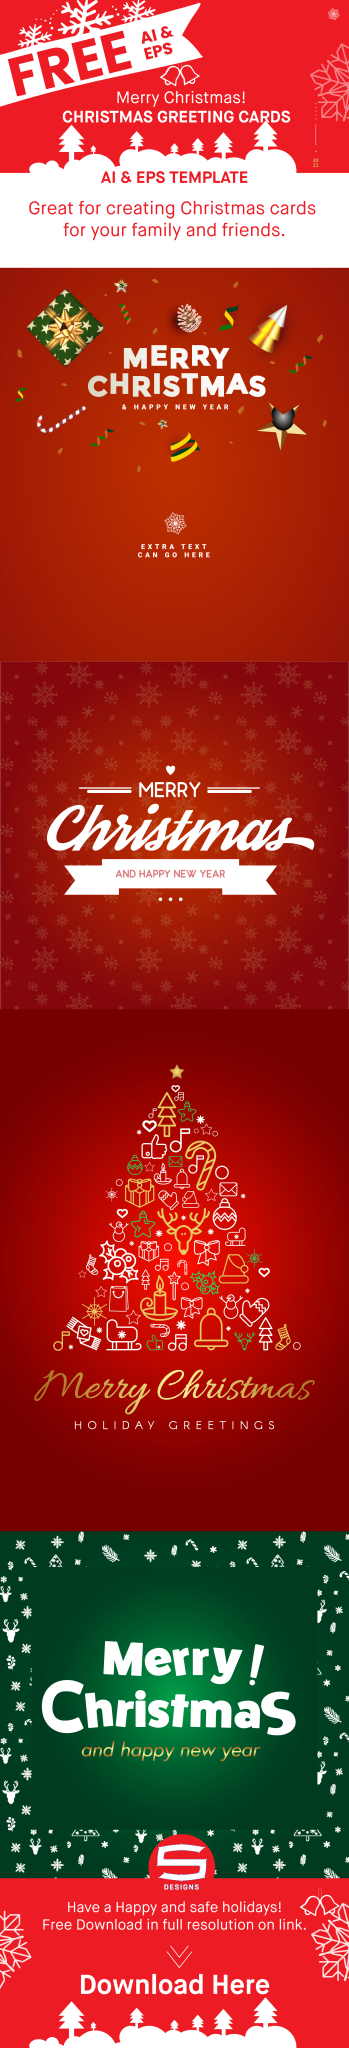 18 Hand-picked Free Christmas Card Templates (Printable, No Watermark ...